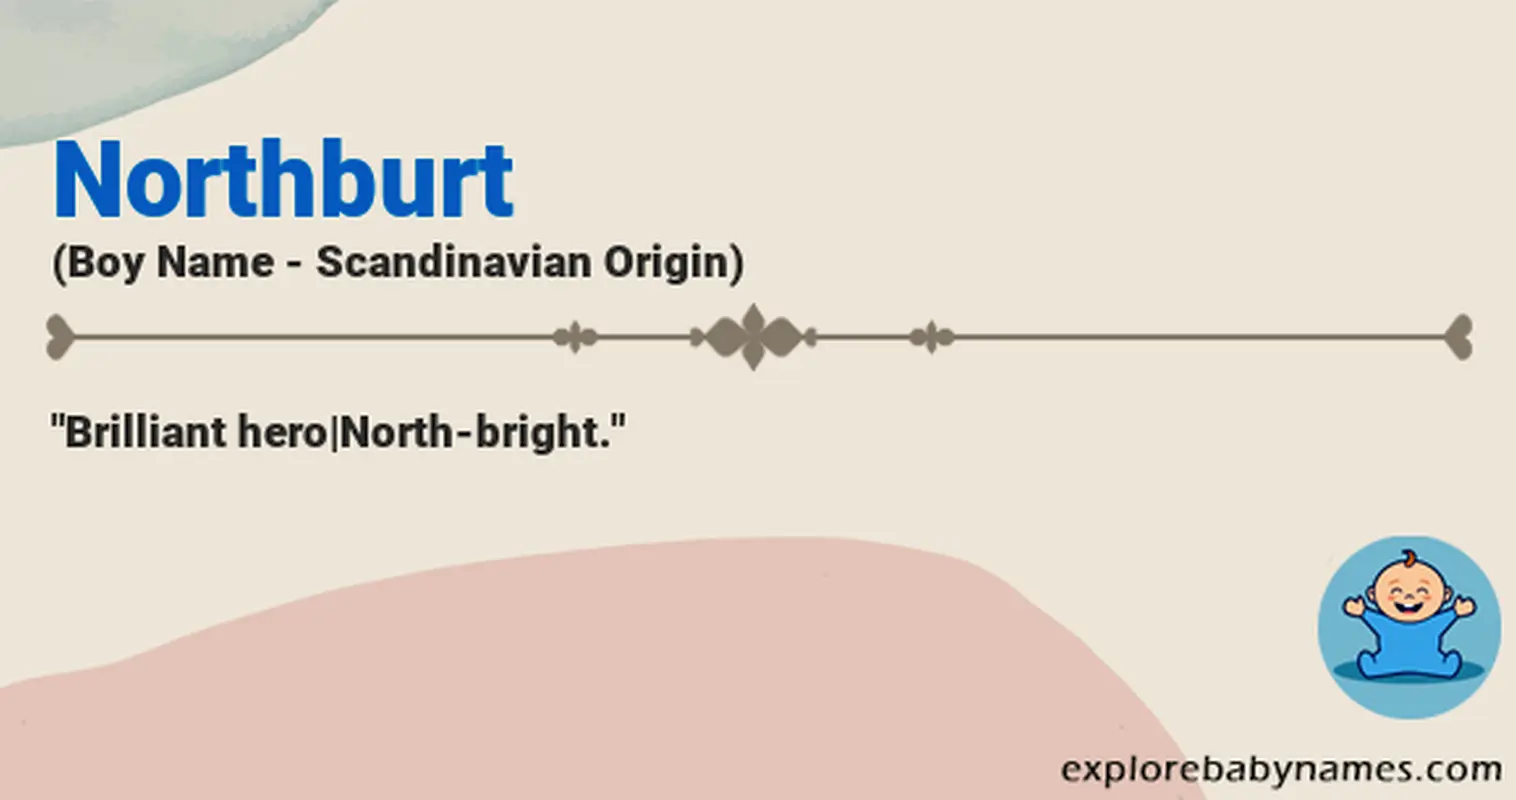 Meaning of Northburt